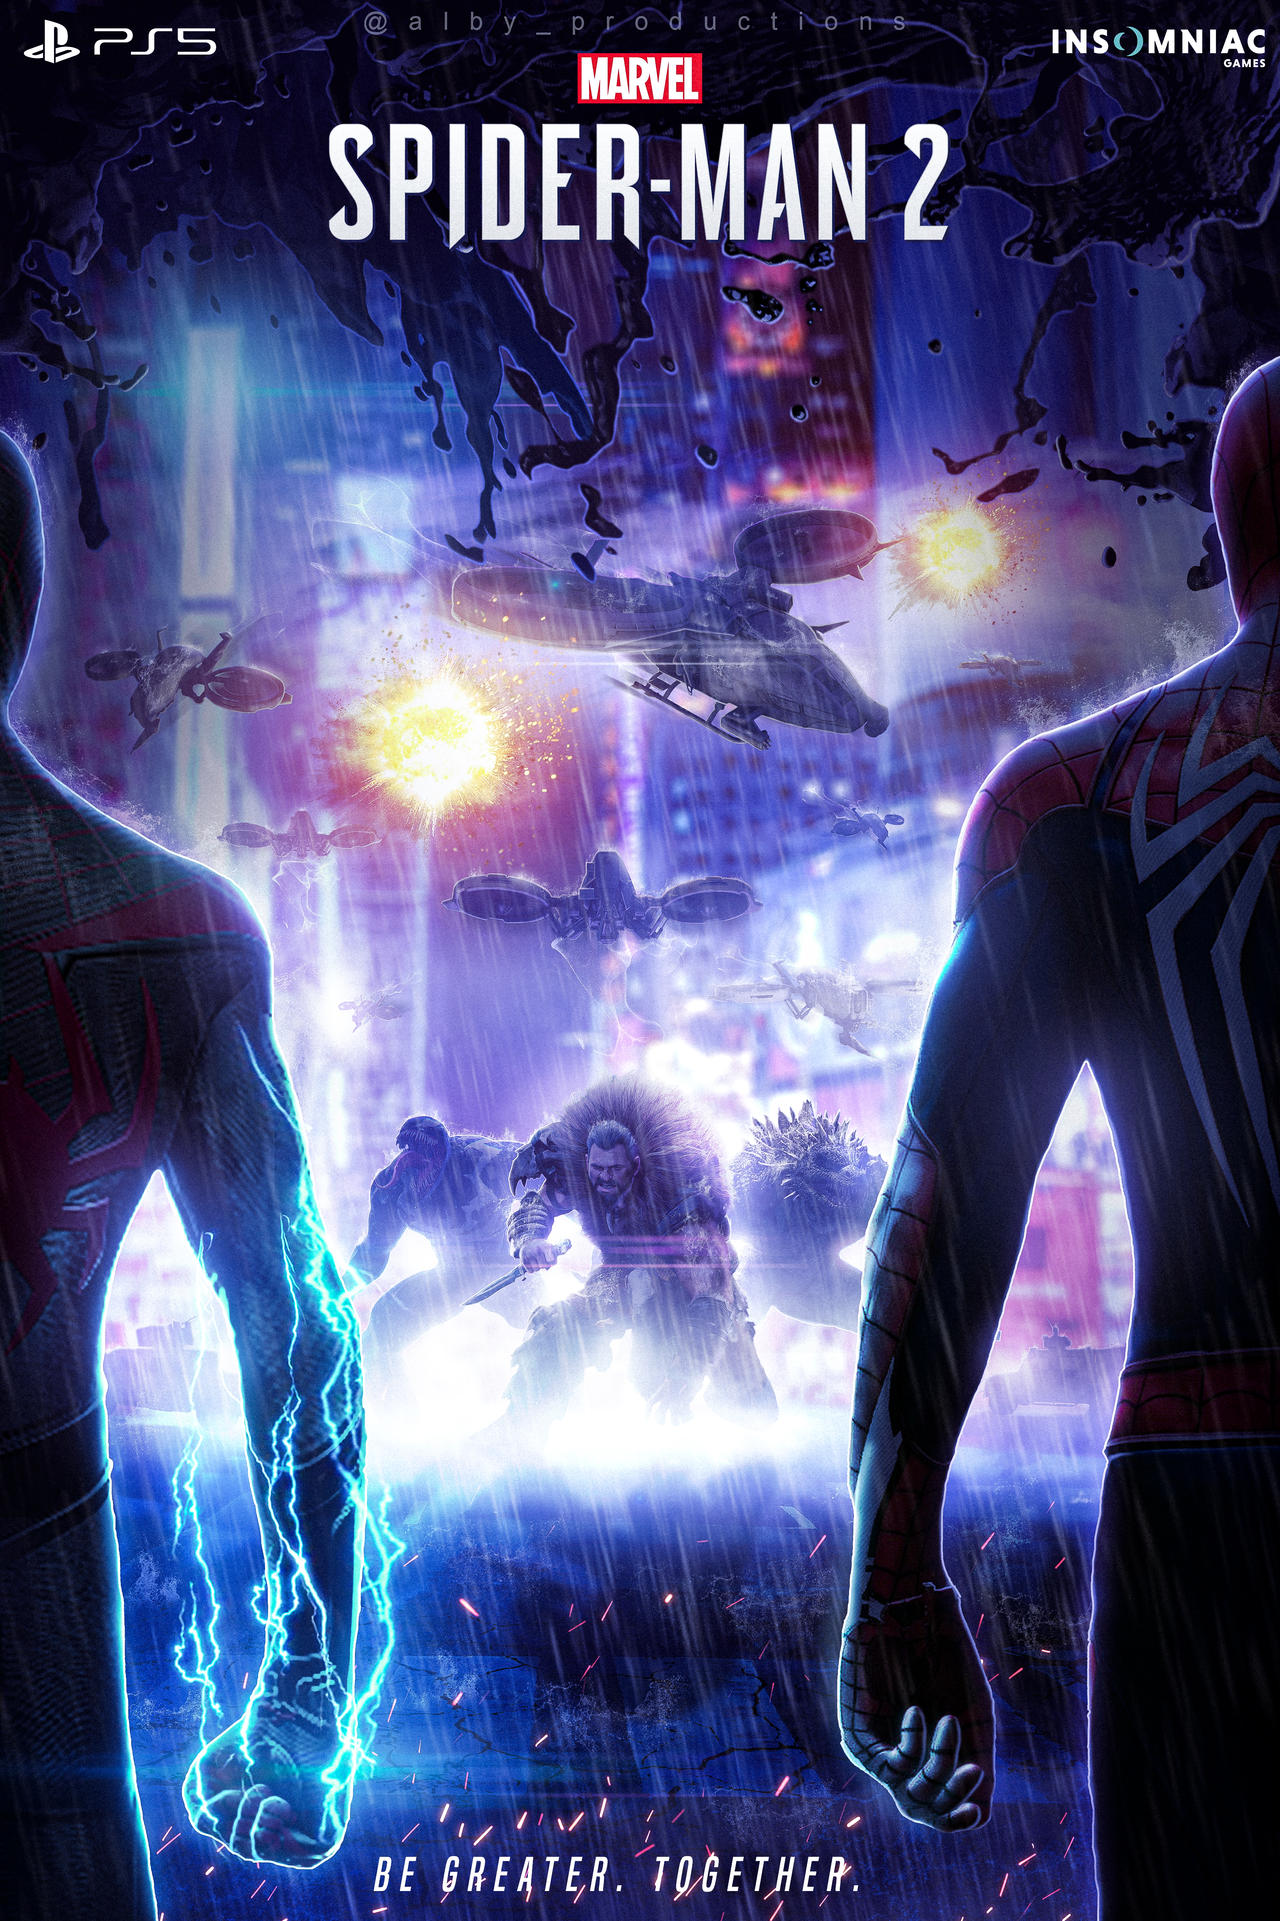 Spiderman 2- PS5 Fan-Poster (Blue Lightning) by Gravelord78 on DeviantArt